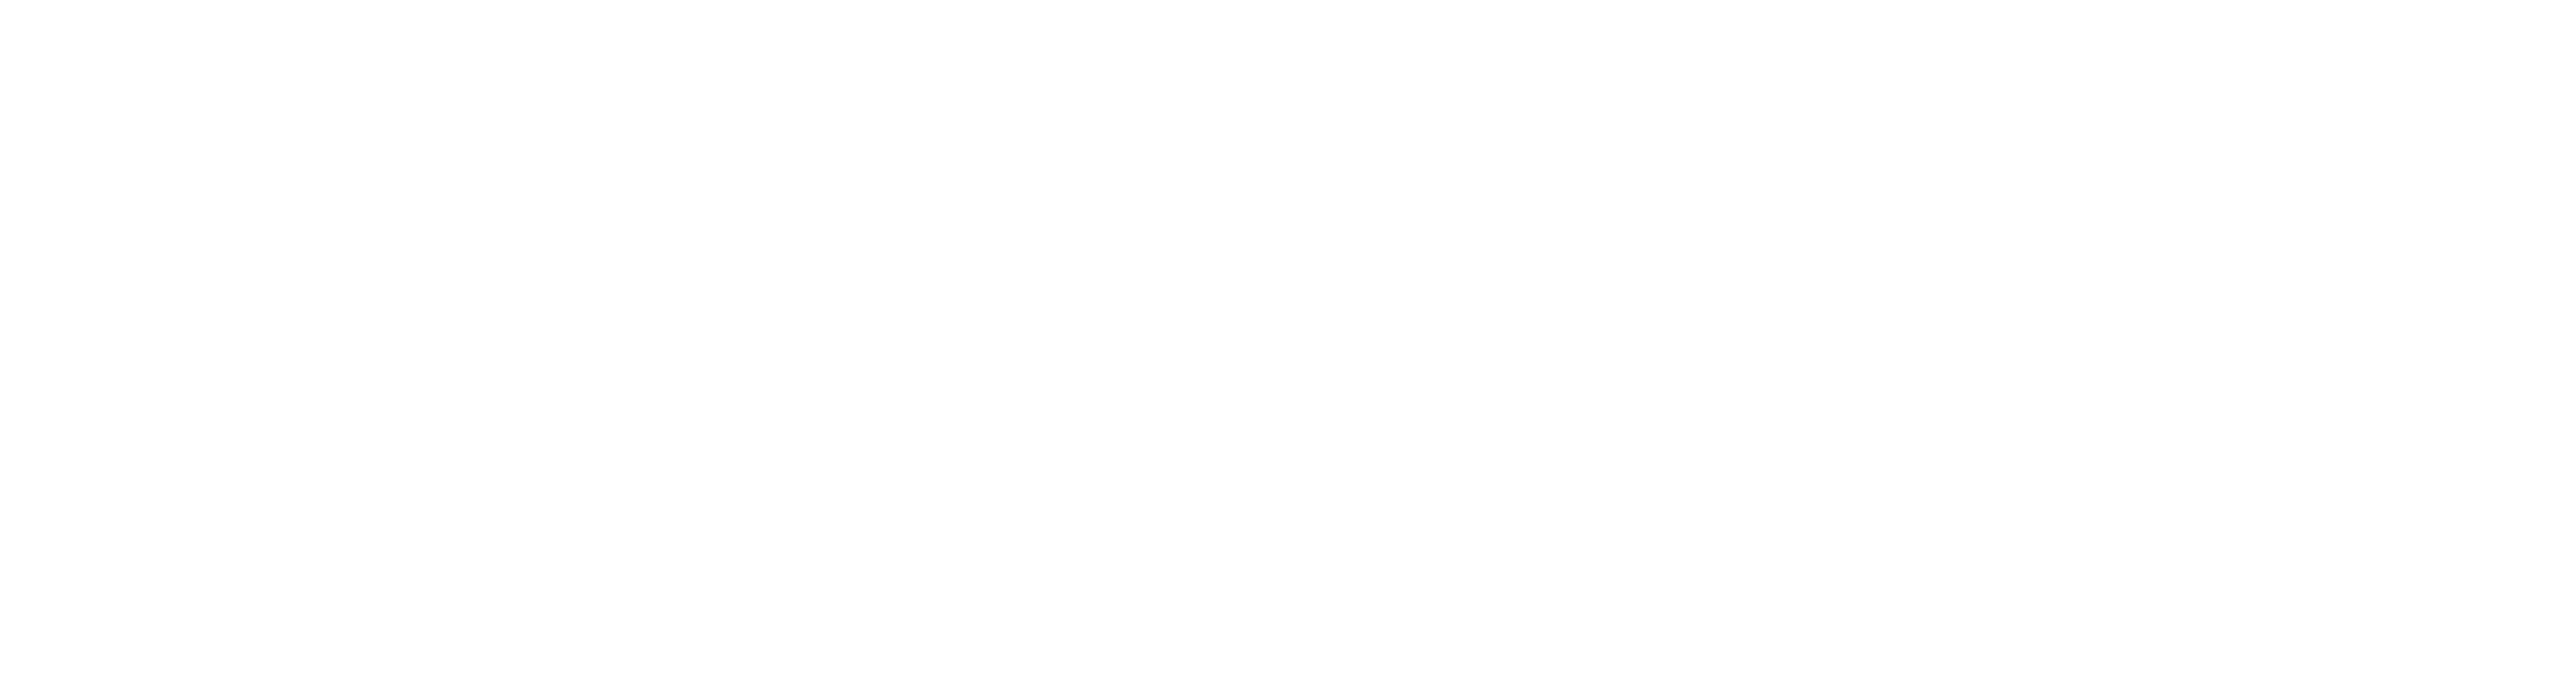 World Cancer Day Brandmark in Maori